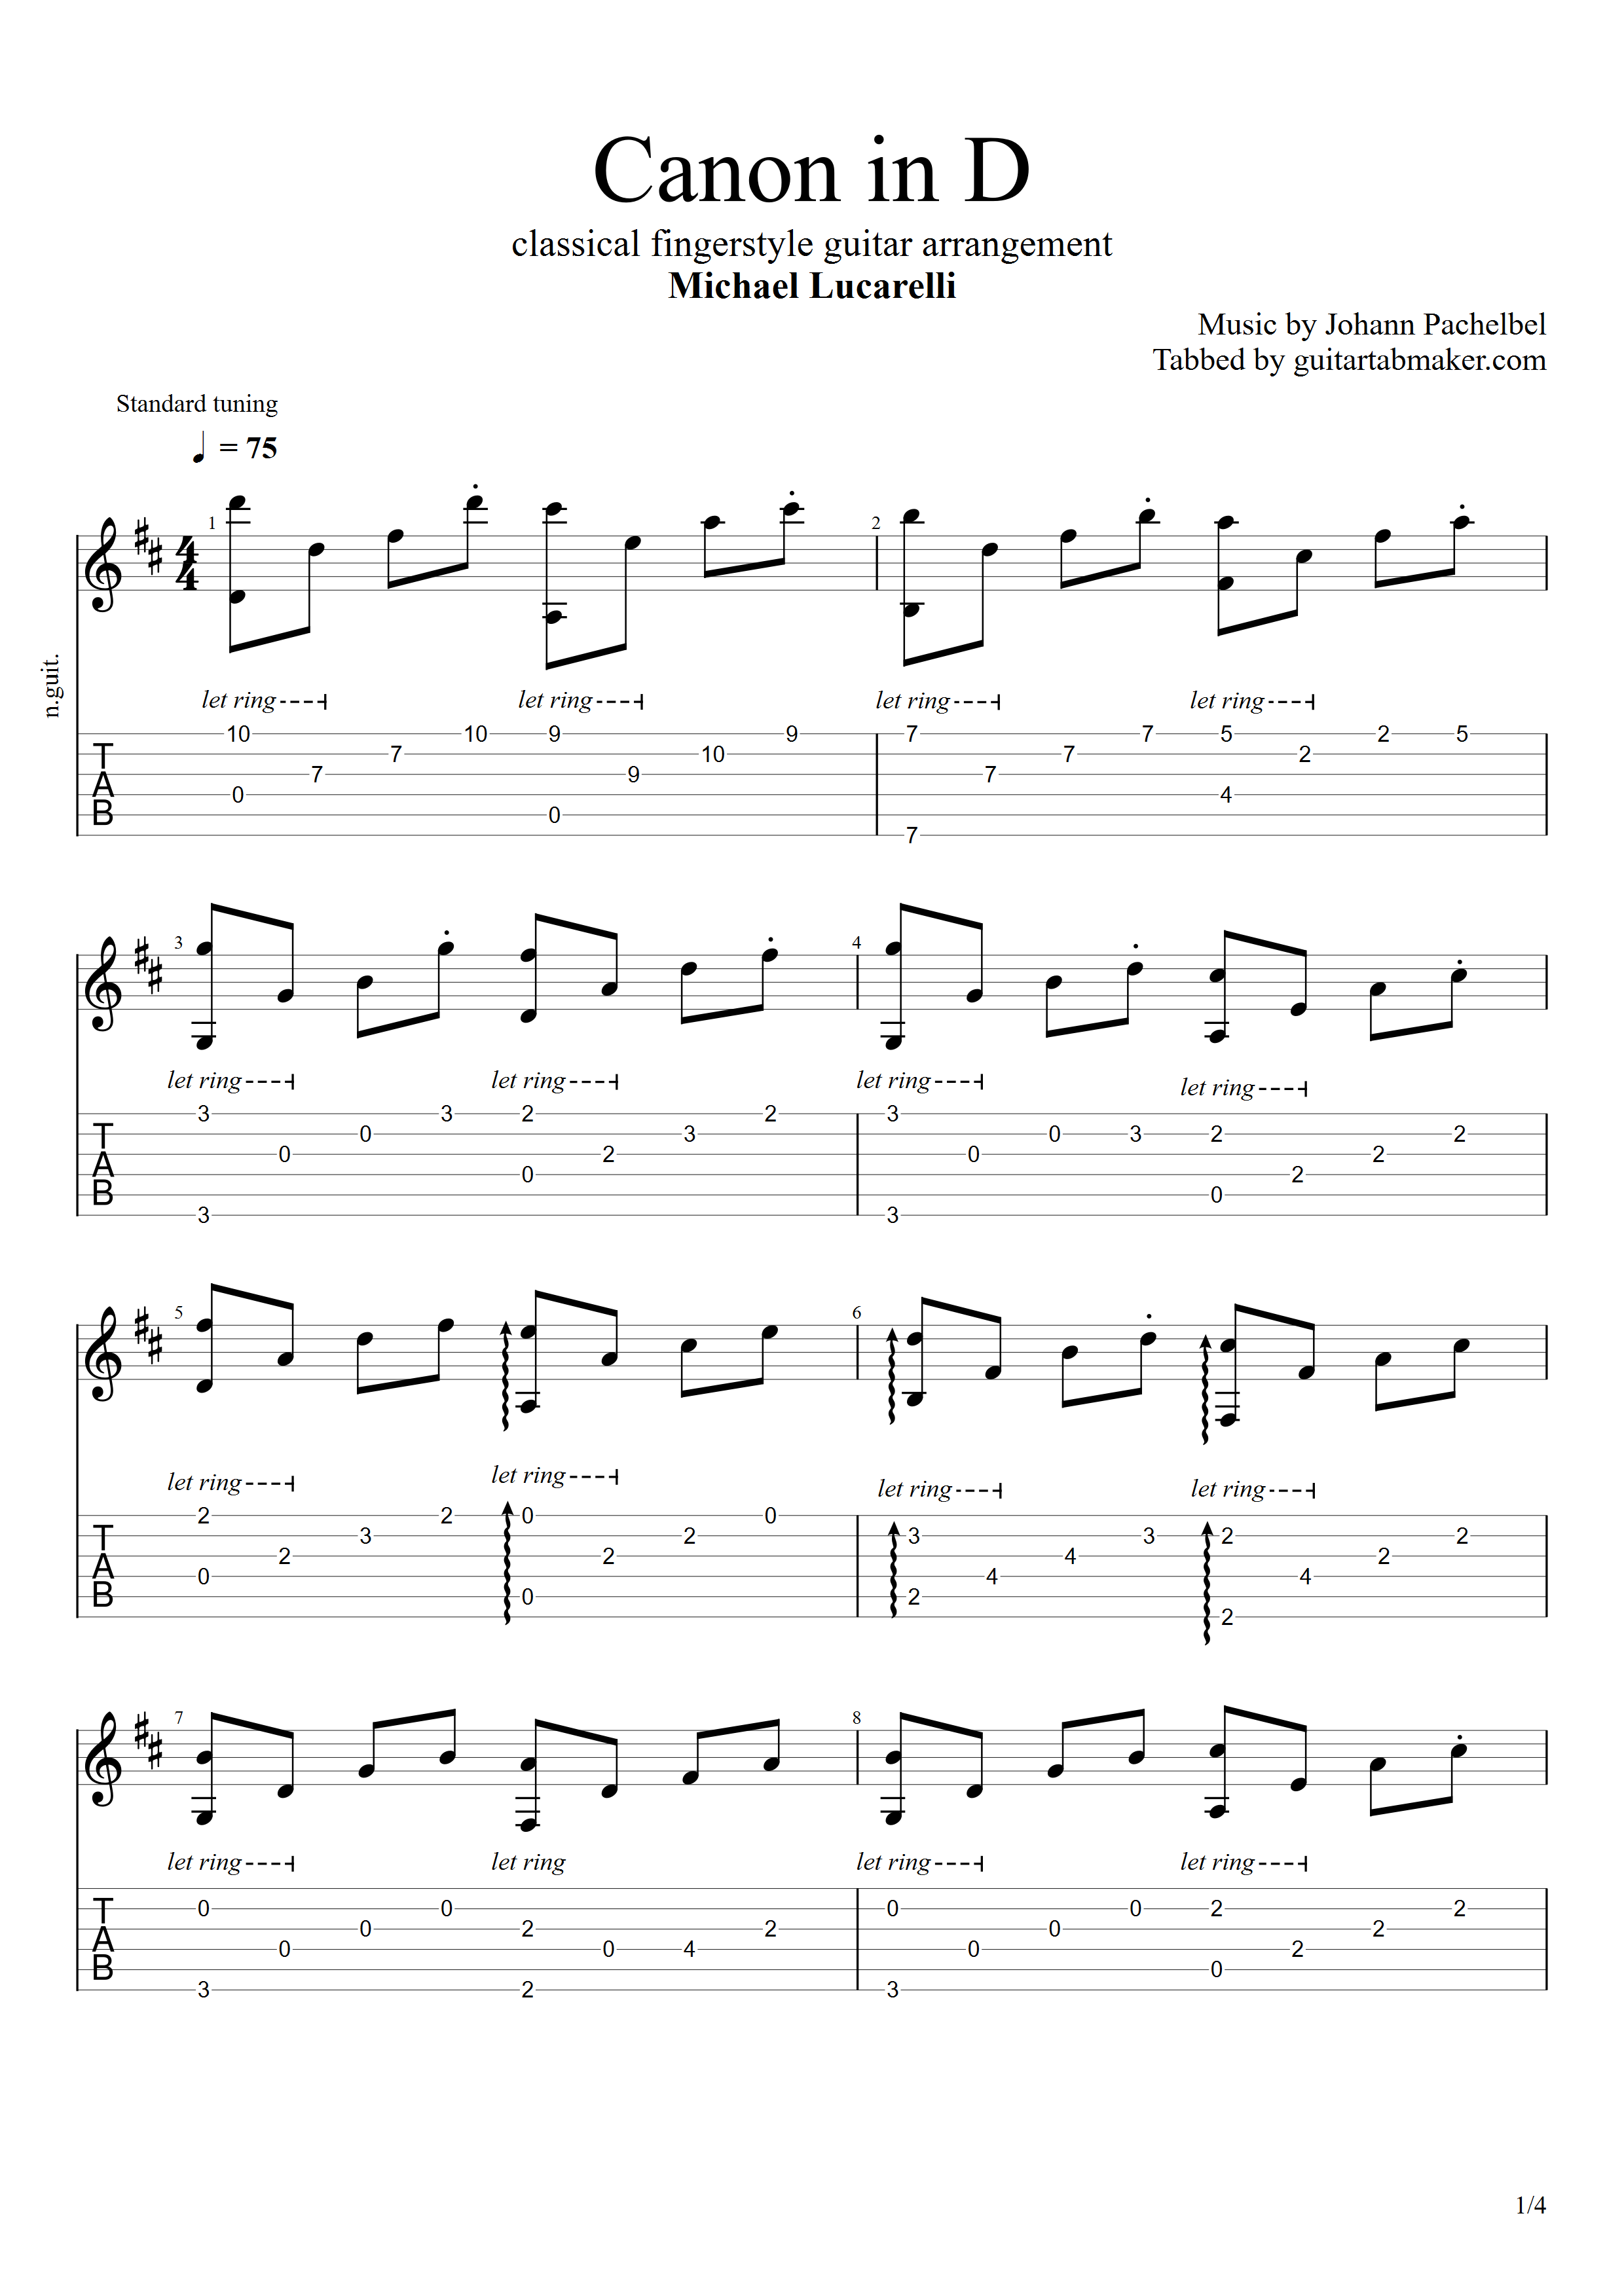 Pachelbel - CANON IN D fingerstyle guitar TAB